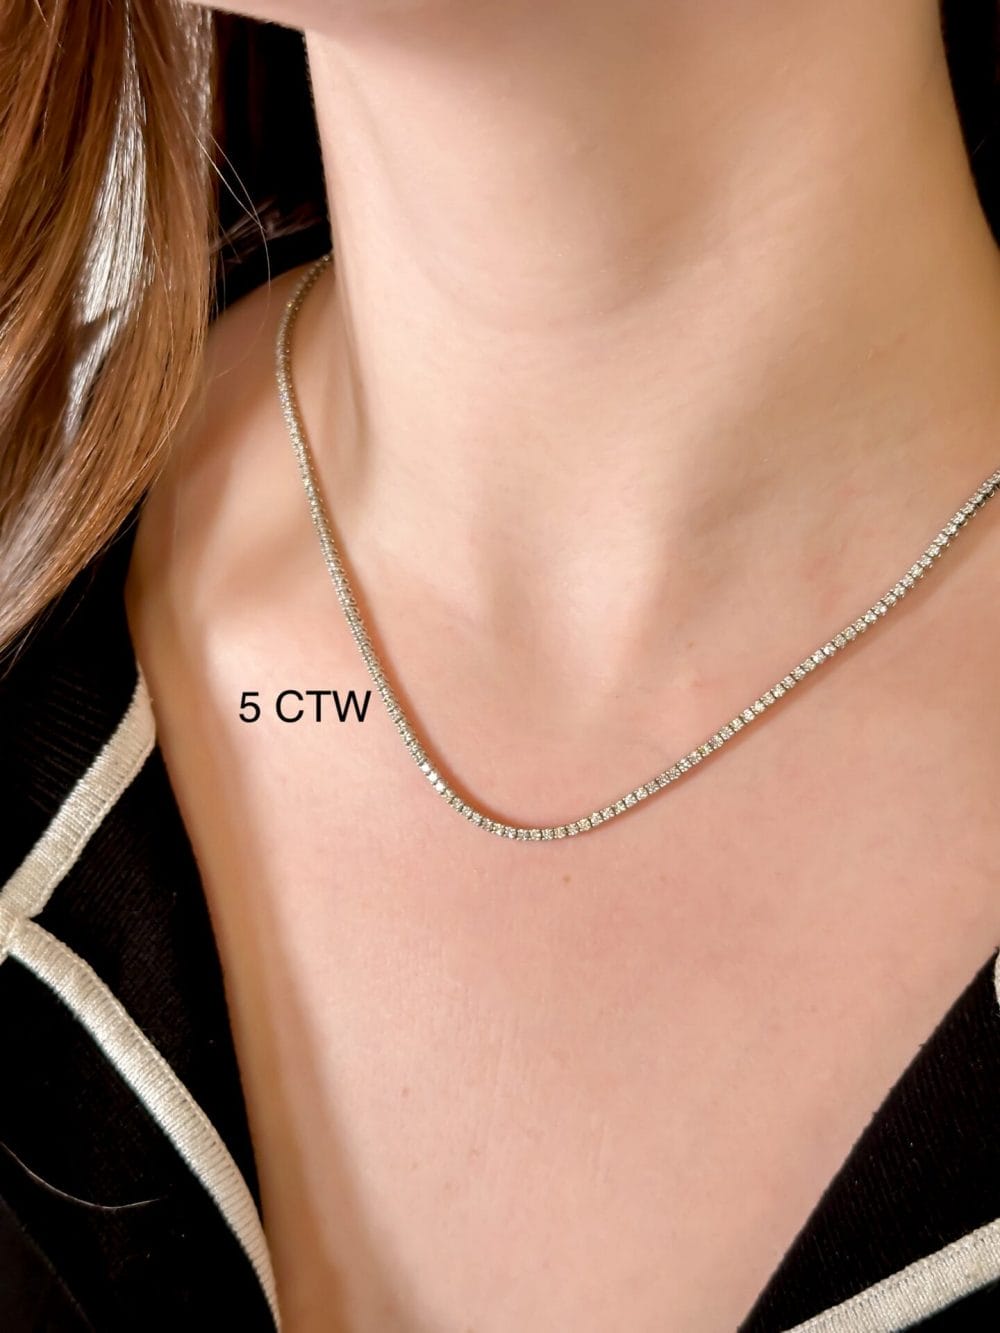 5 CTW Tennis necklace Verstolo